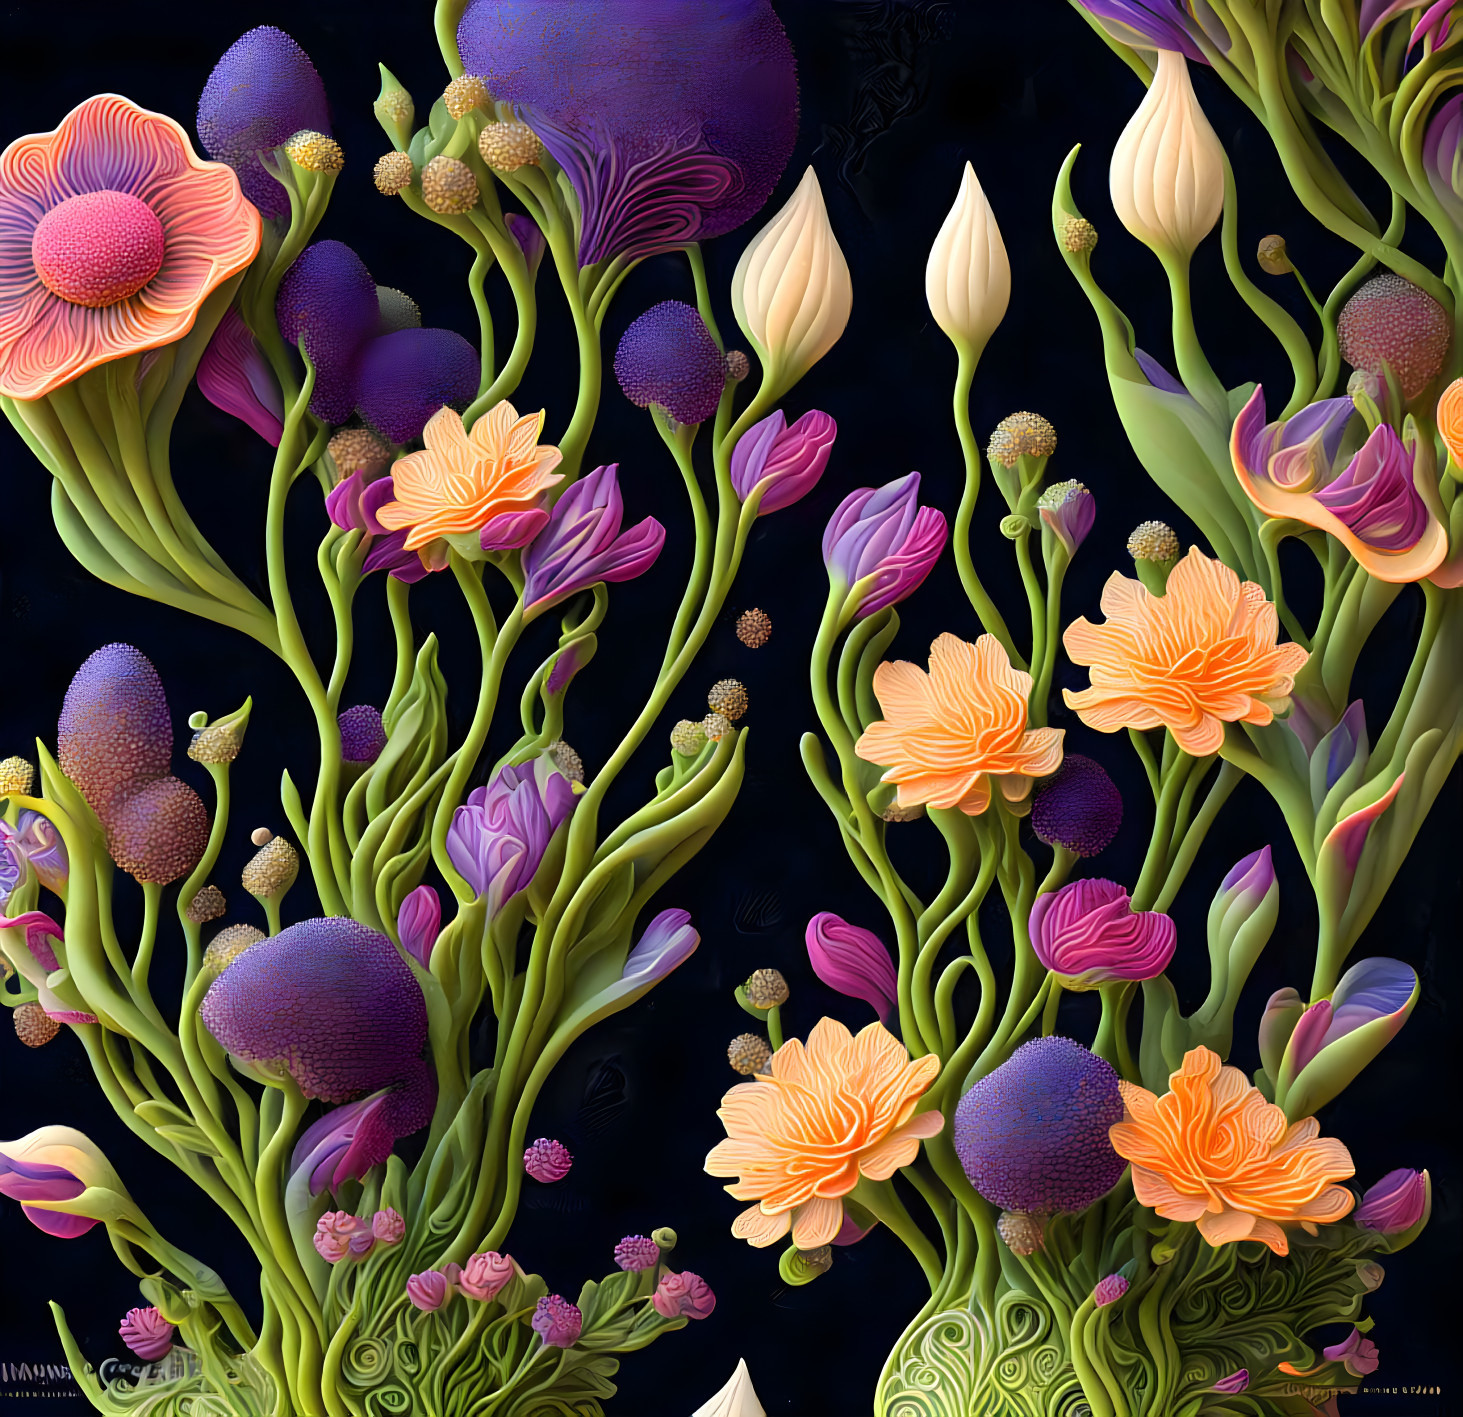 Fantasy biomorphic floral arrangement 